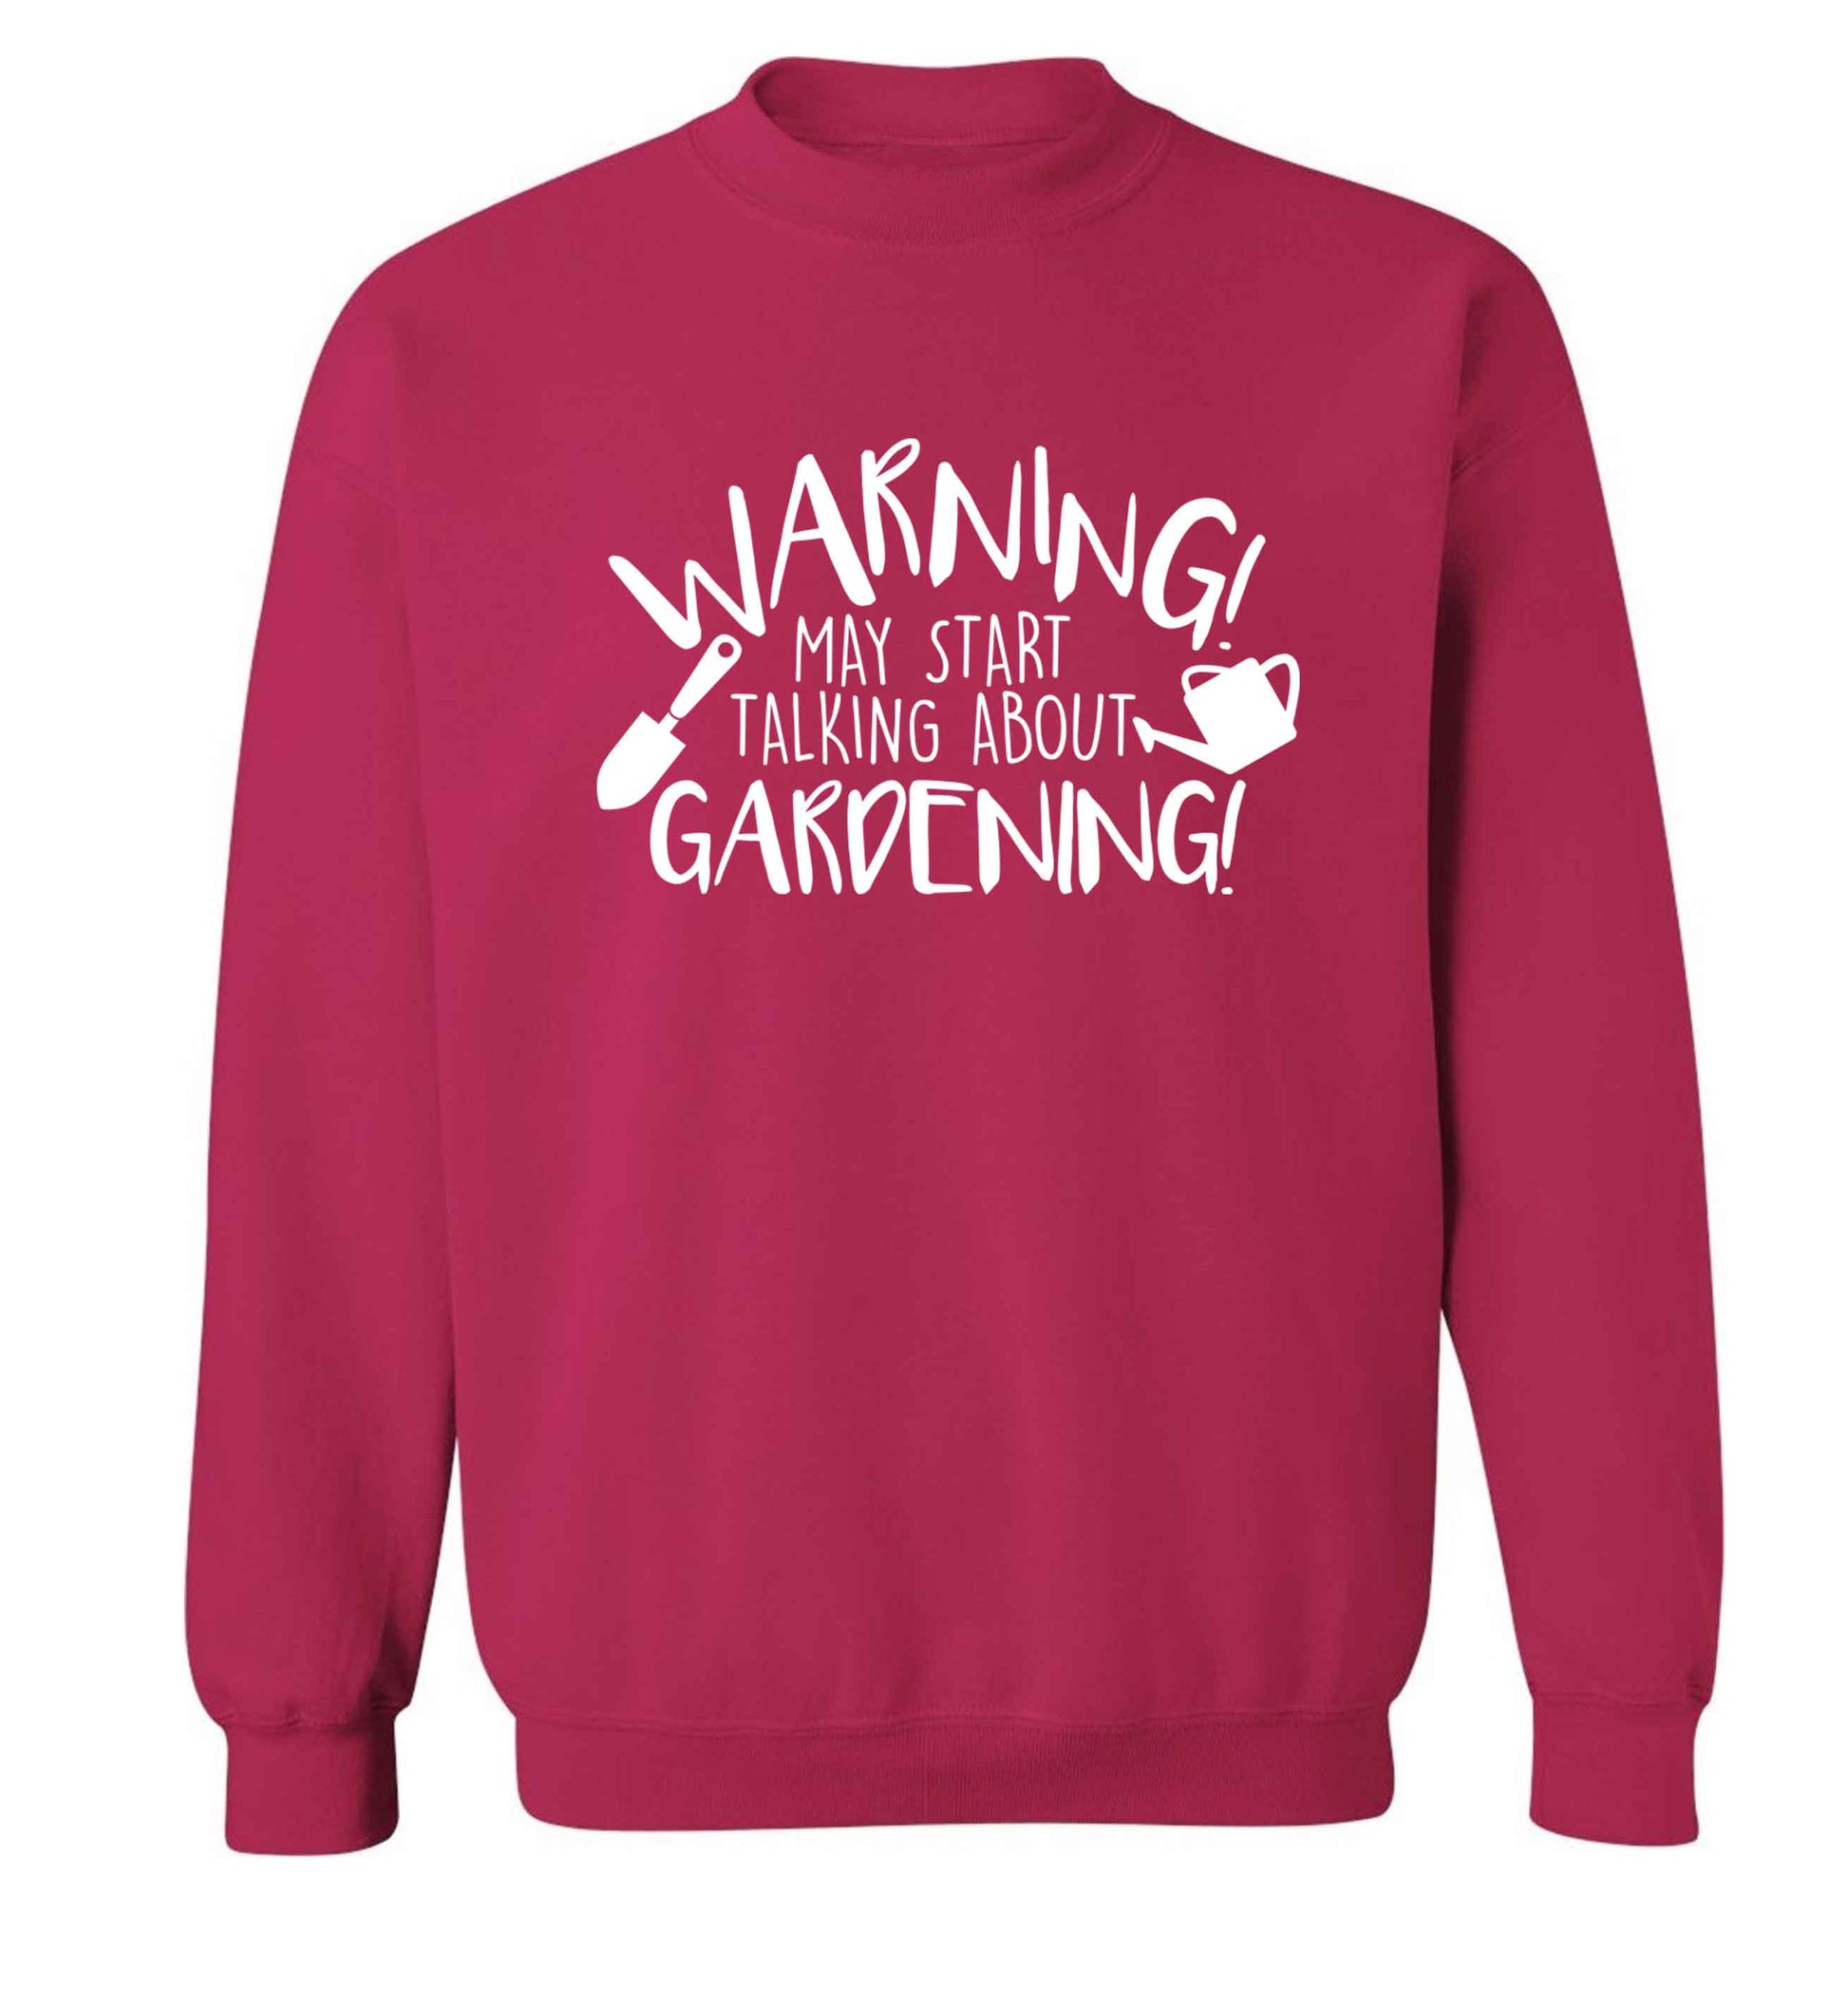 Warning may start talking about gardening Adult's unisex pink Sweater 2XL